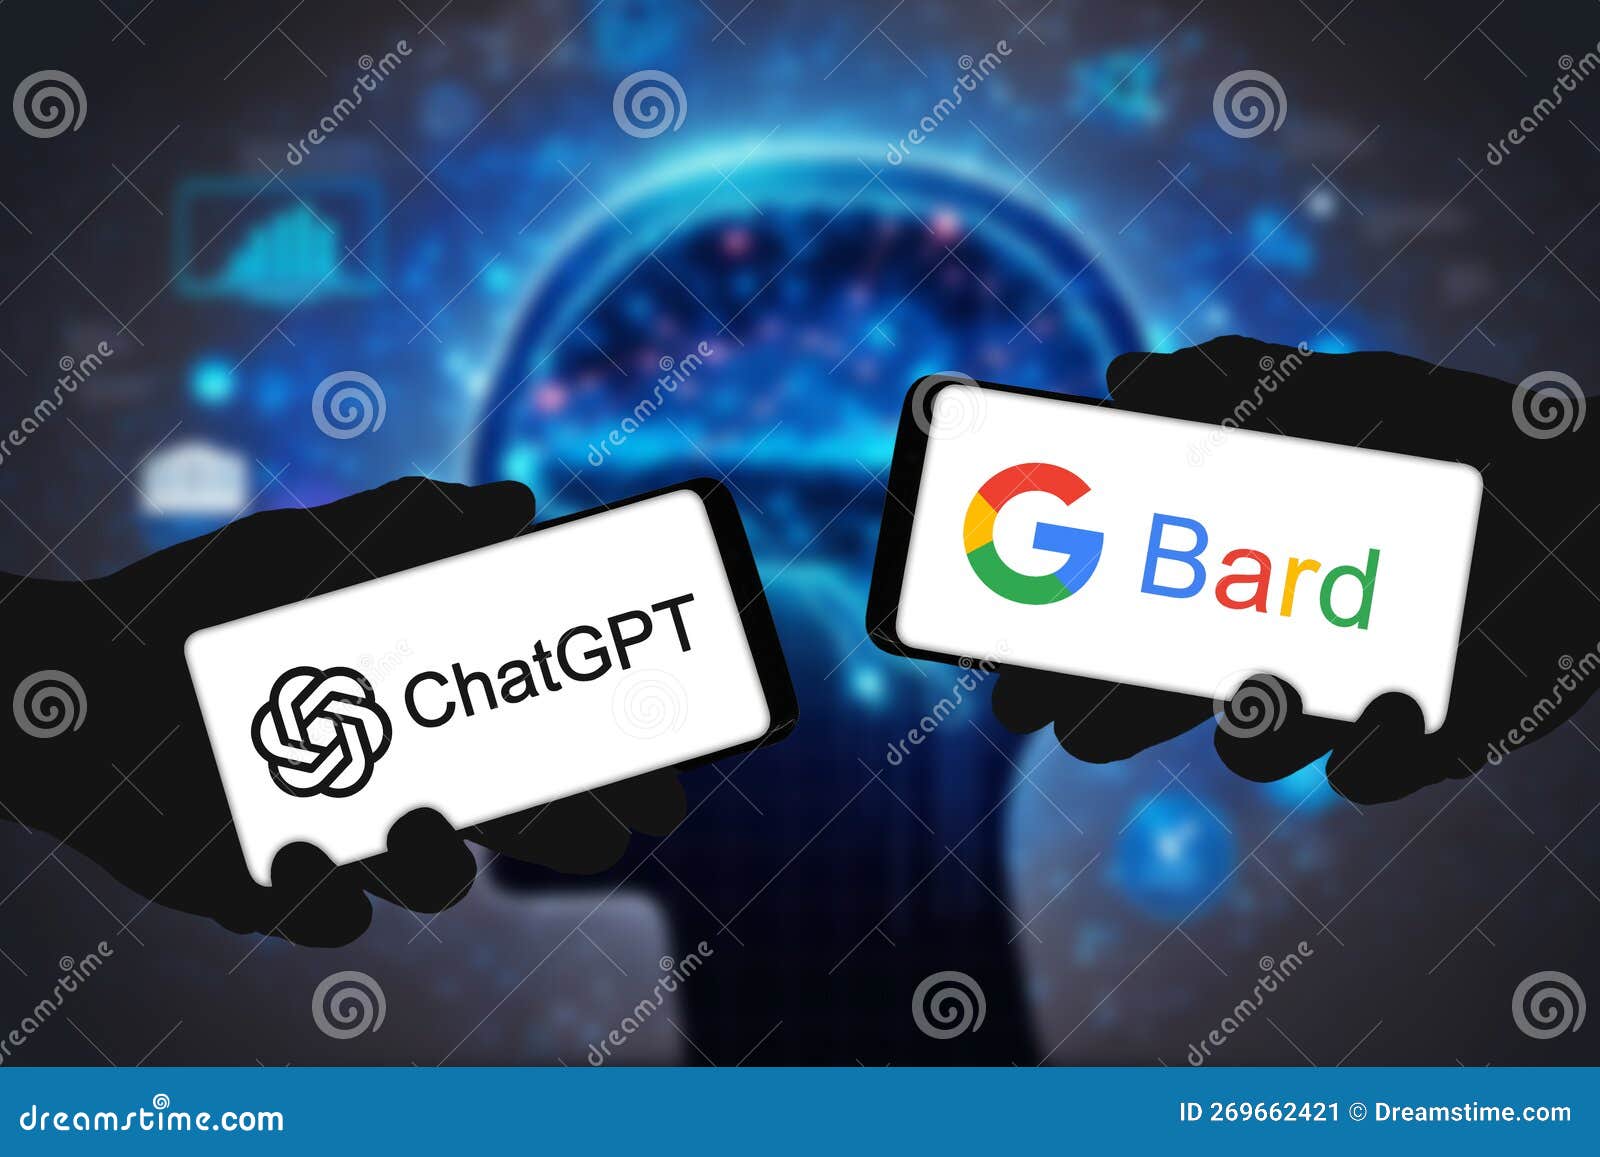 ChatGPT and Google Bard - AI Chatbot Technology Editorial Photo - Image